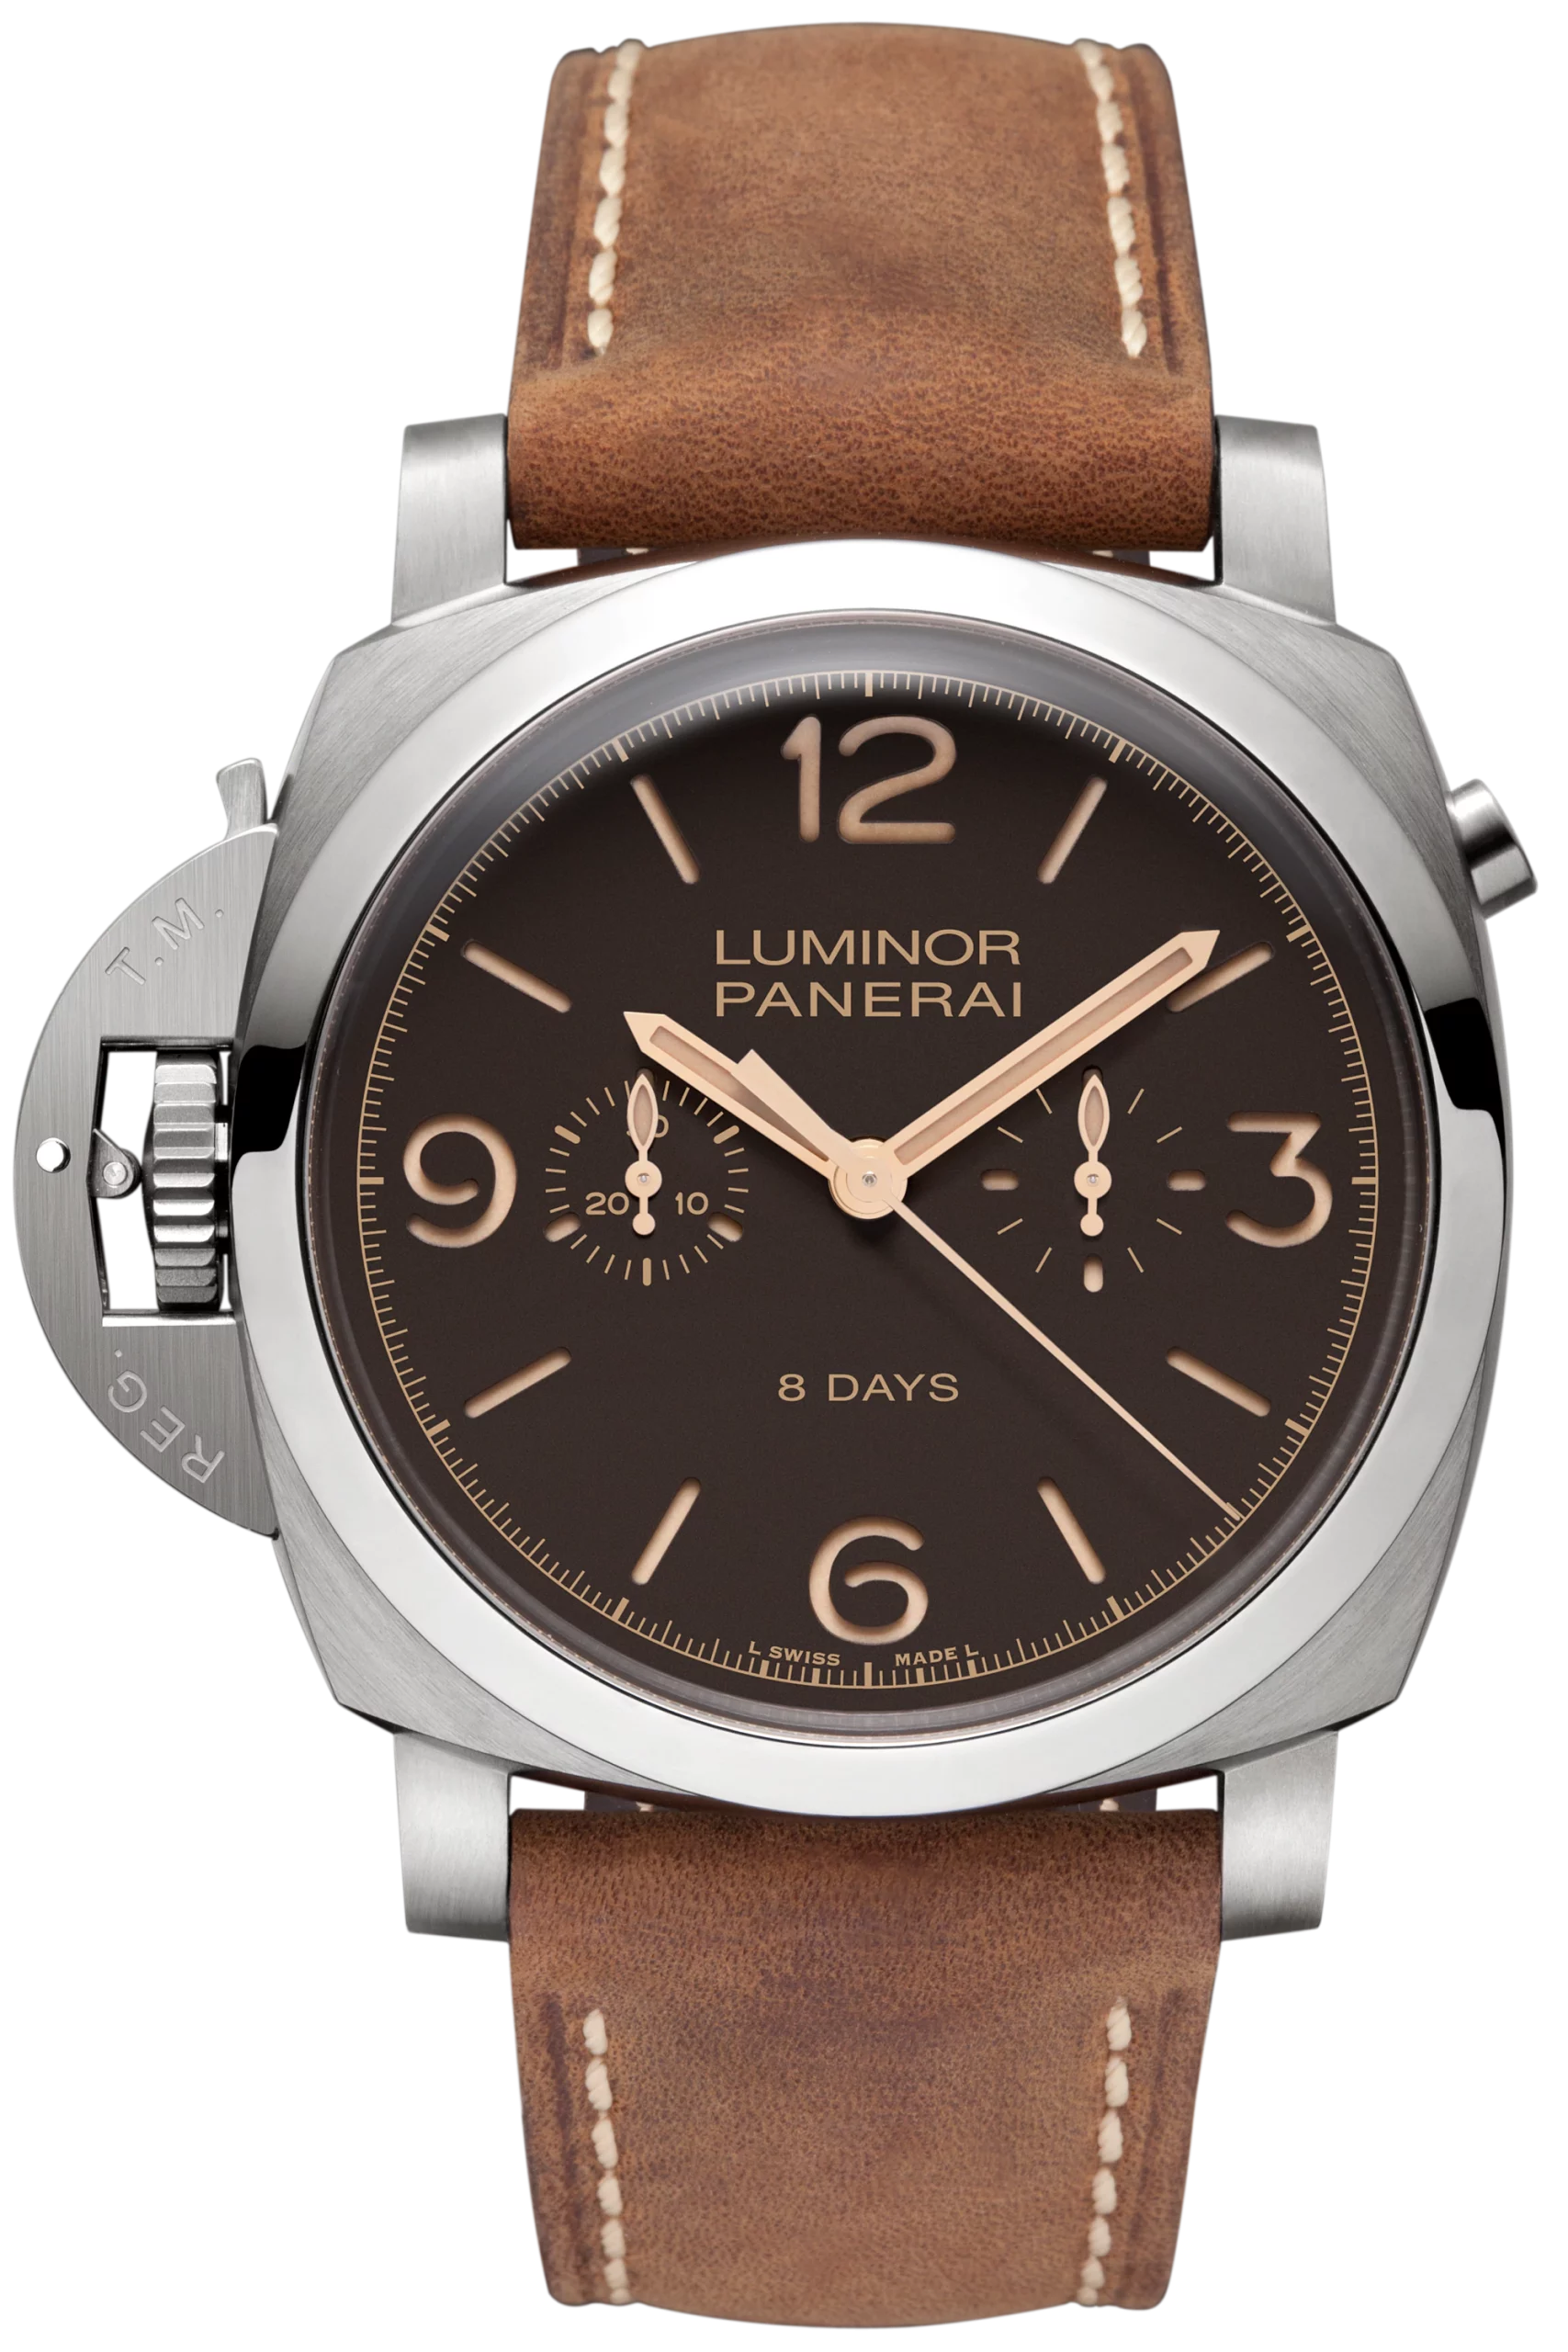 luminor-1950-chronograph-sihh-2014-2